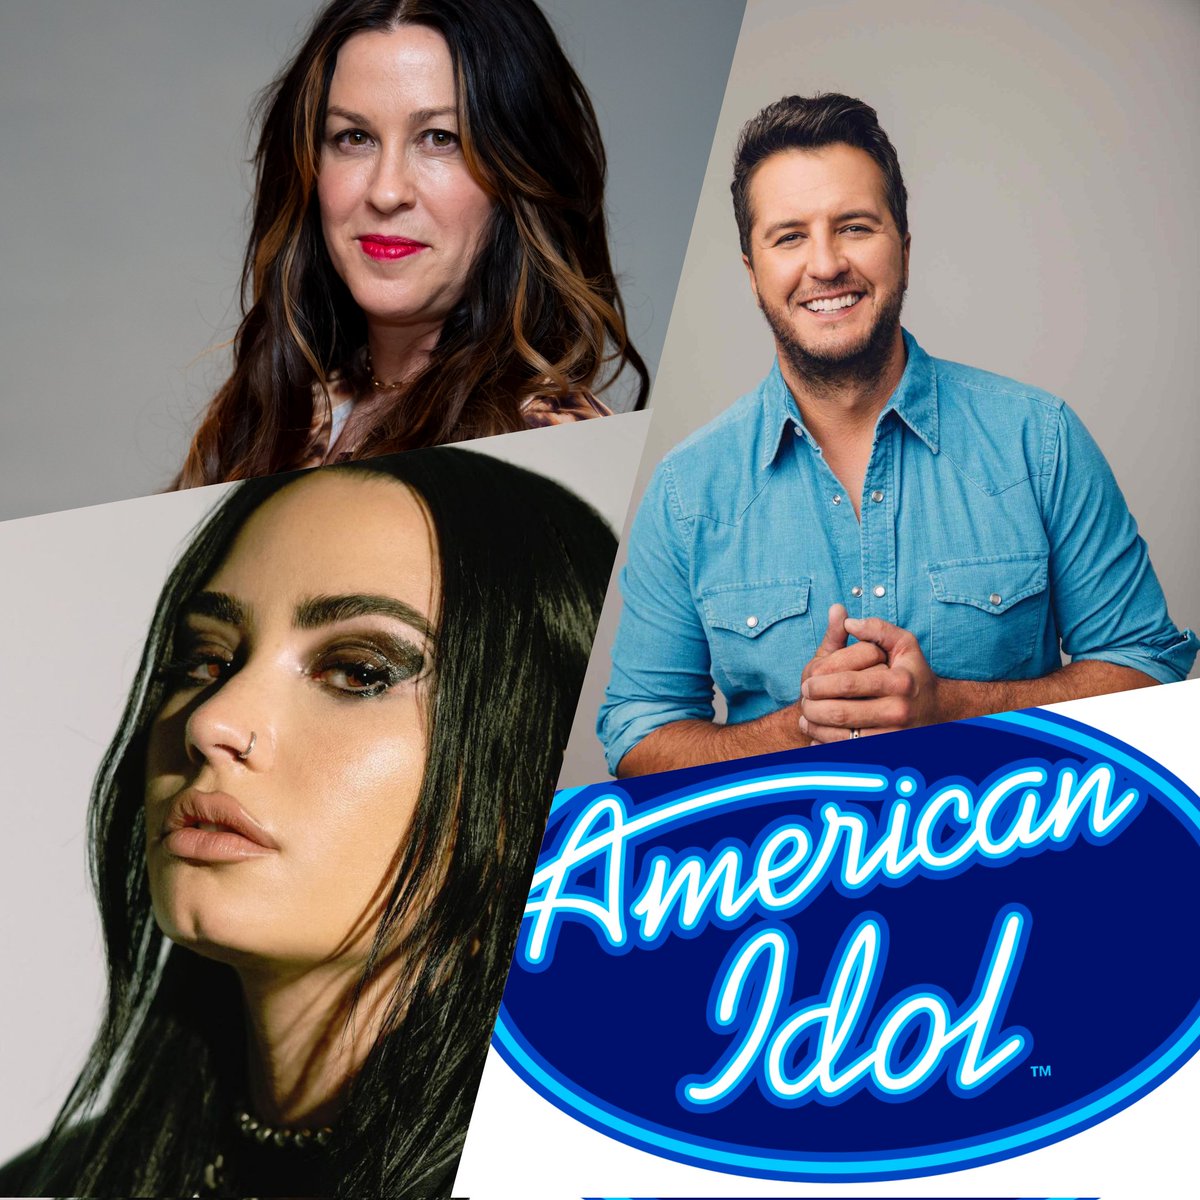 According to the GMA, Alanis Morissette, Luke Bryan, and Demi Lovato will serve as judges of American Idol's next season.